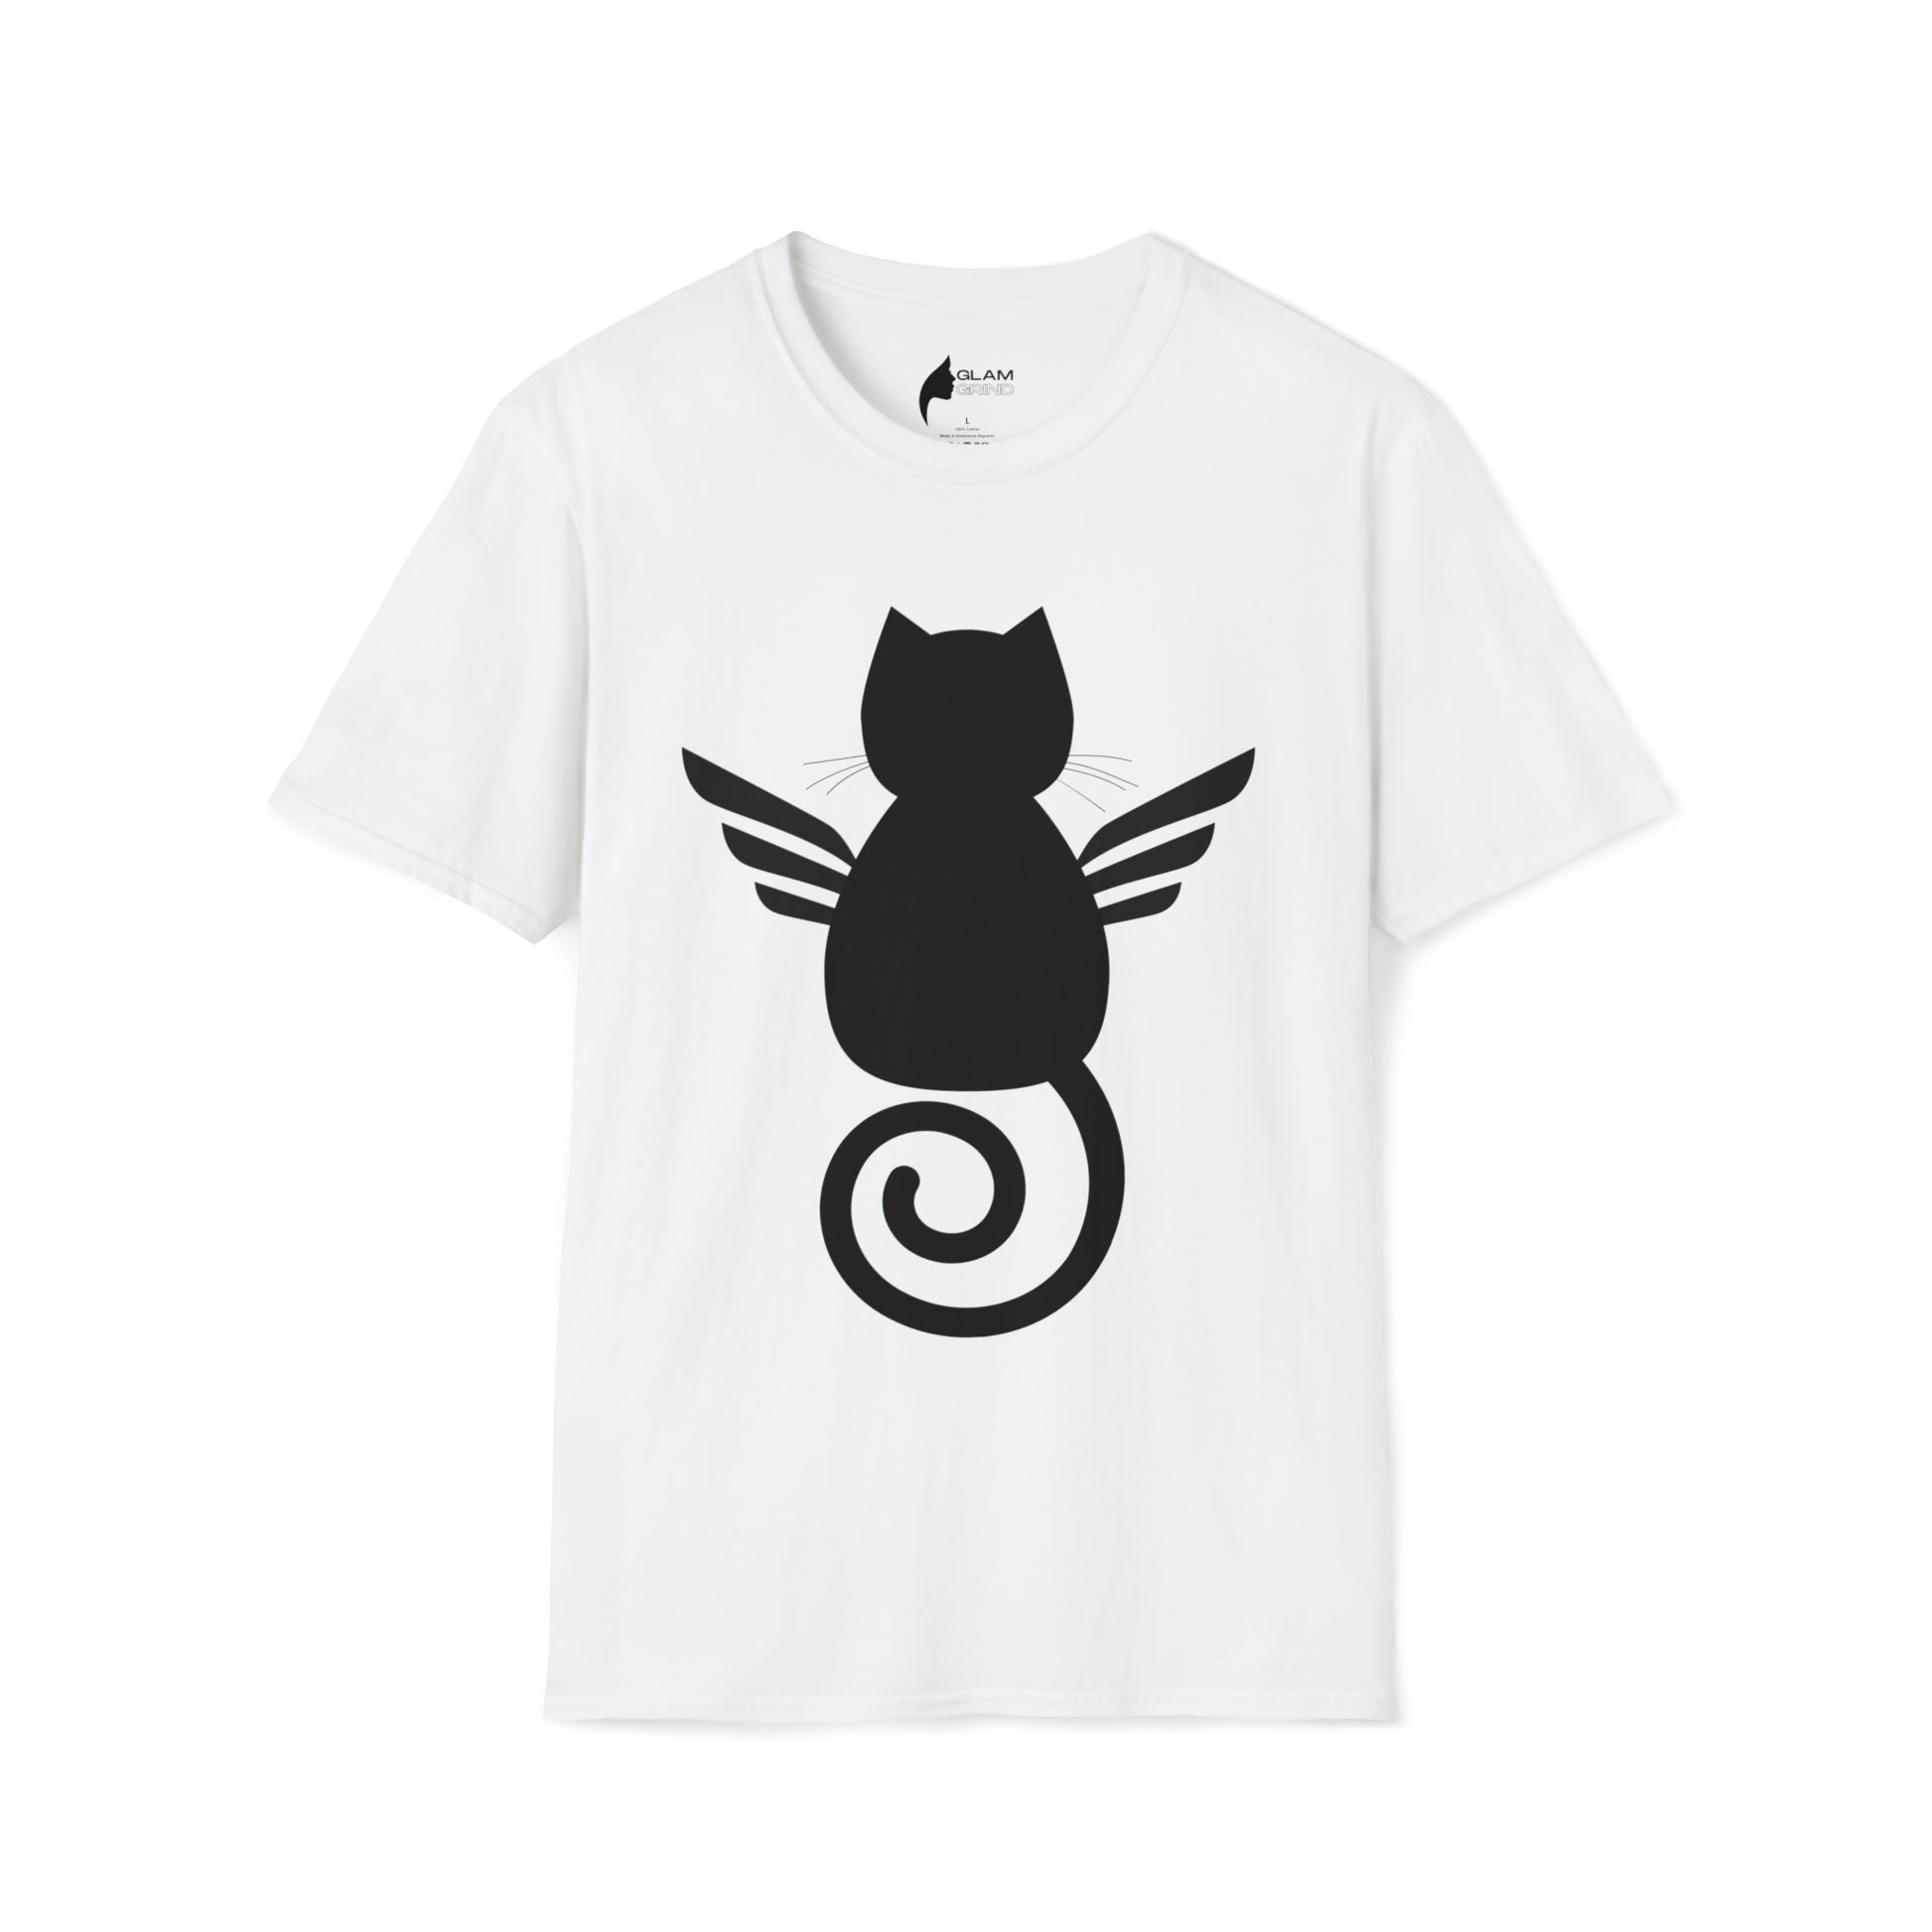 Angelic Kitty Graphic T-Shirt Women Inspirational Statement Apparel